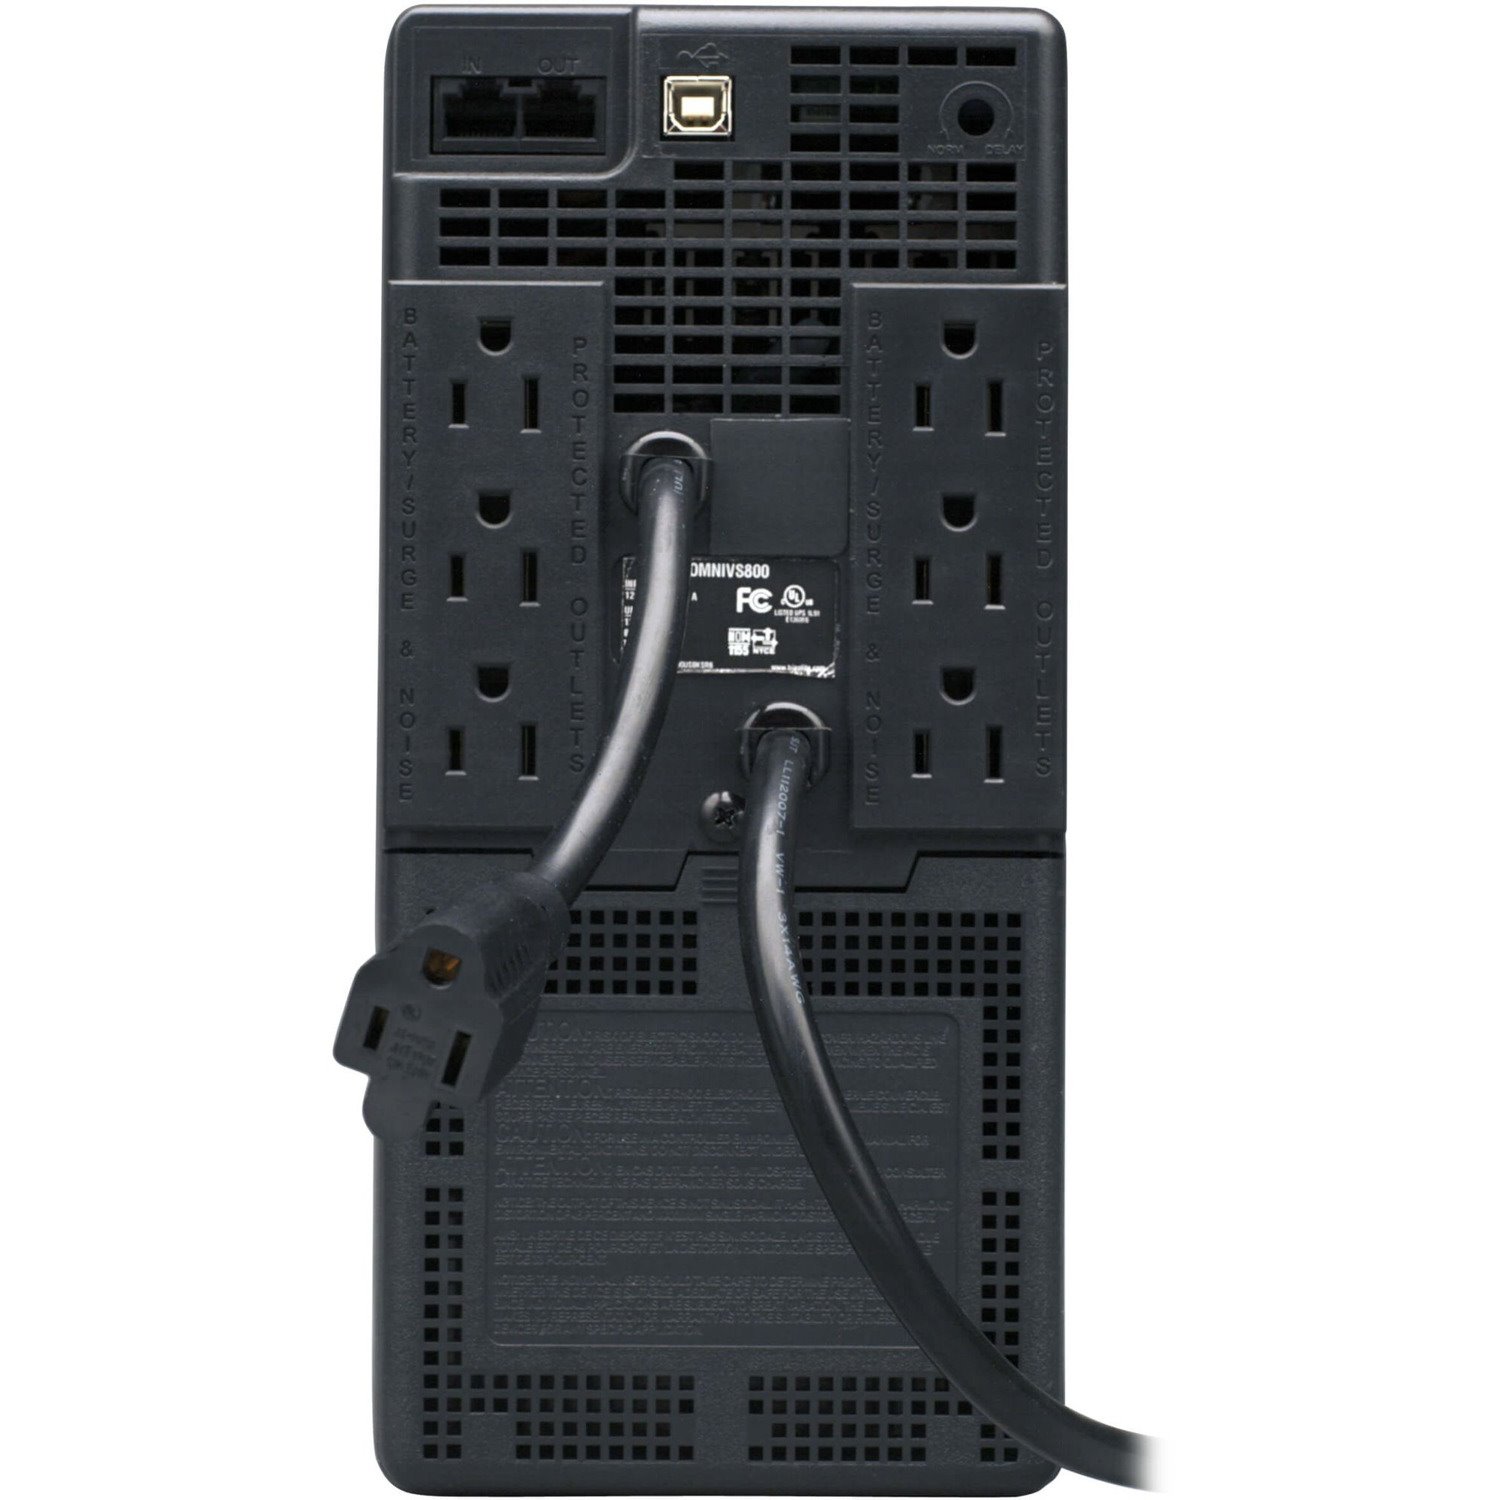 Tripp Lite by Eaton OmniVS 120V 800VA 475W Line-Interactive UPS, Tower, USB port - Battery Backup